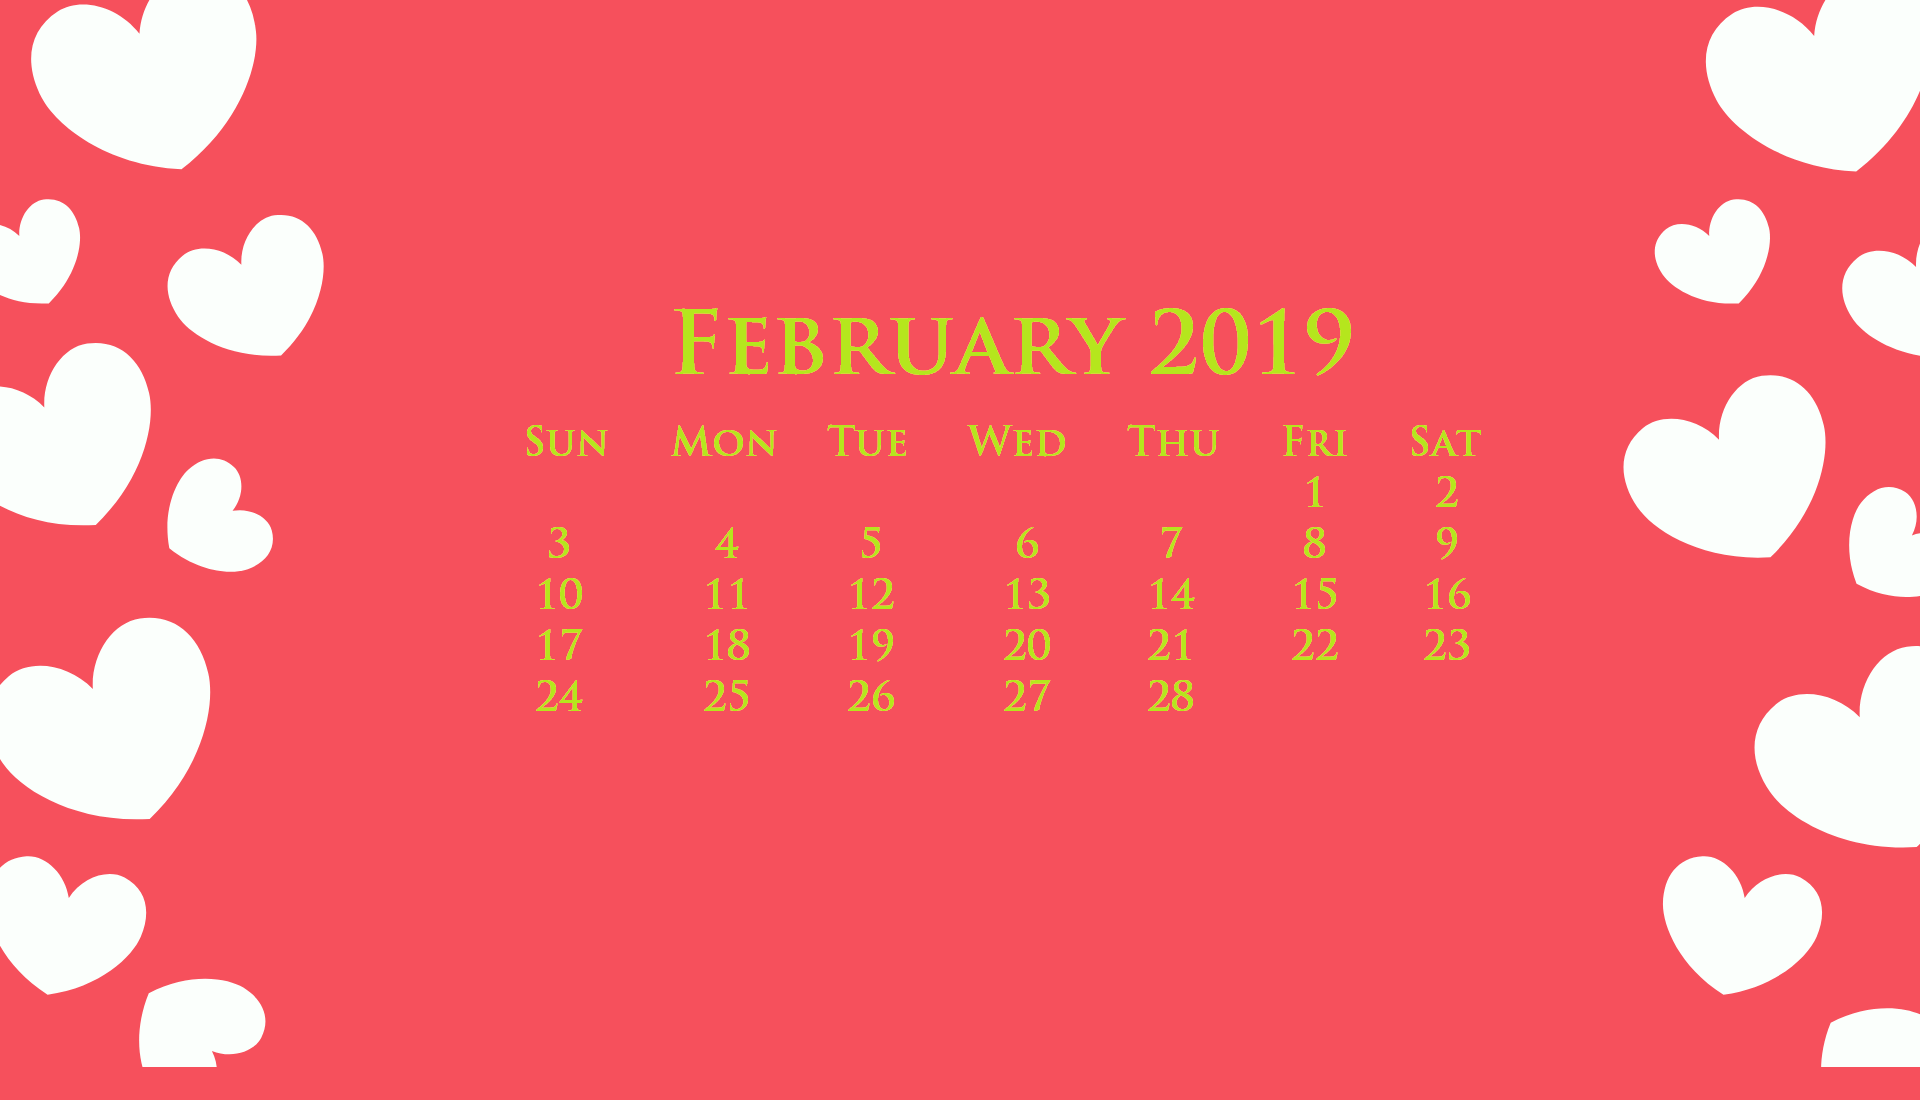 February 2019 Calendar Wallpapers - Wallpaper Cave